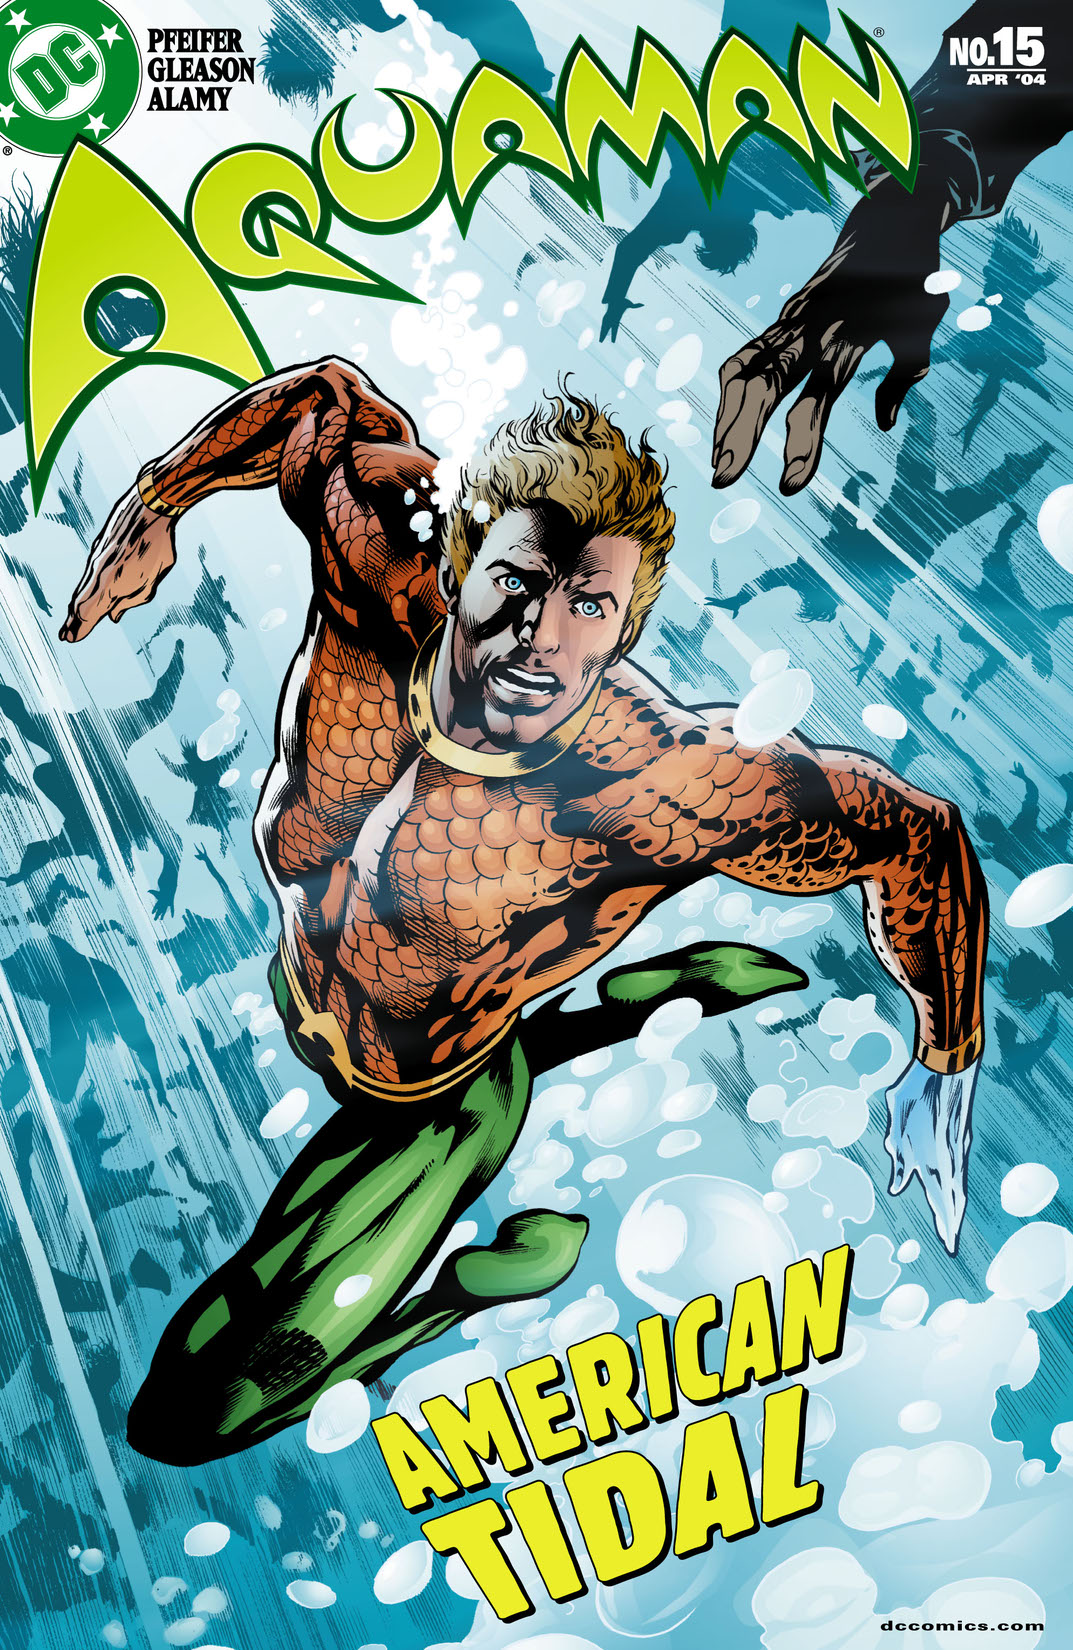 Aquaman (2002-) #15 preview images